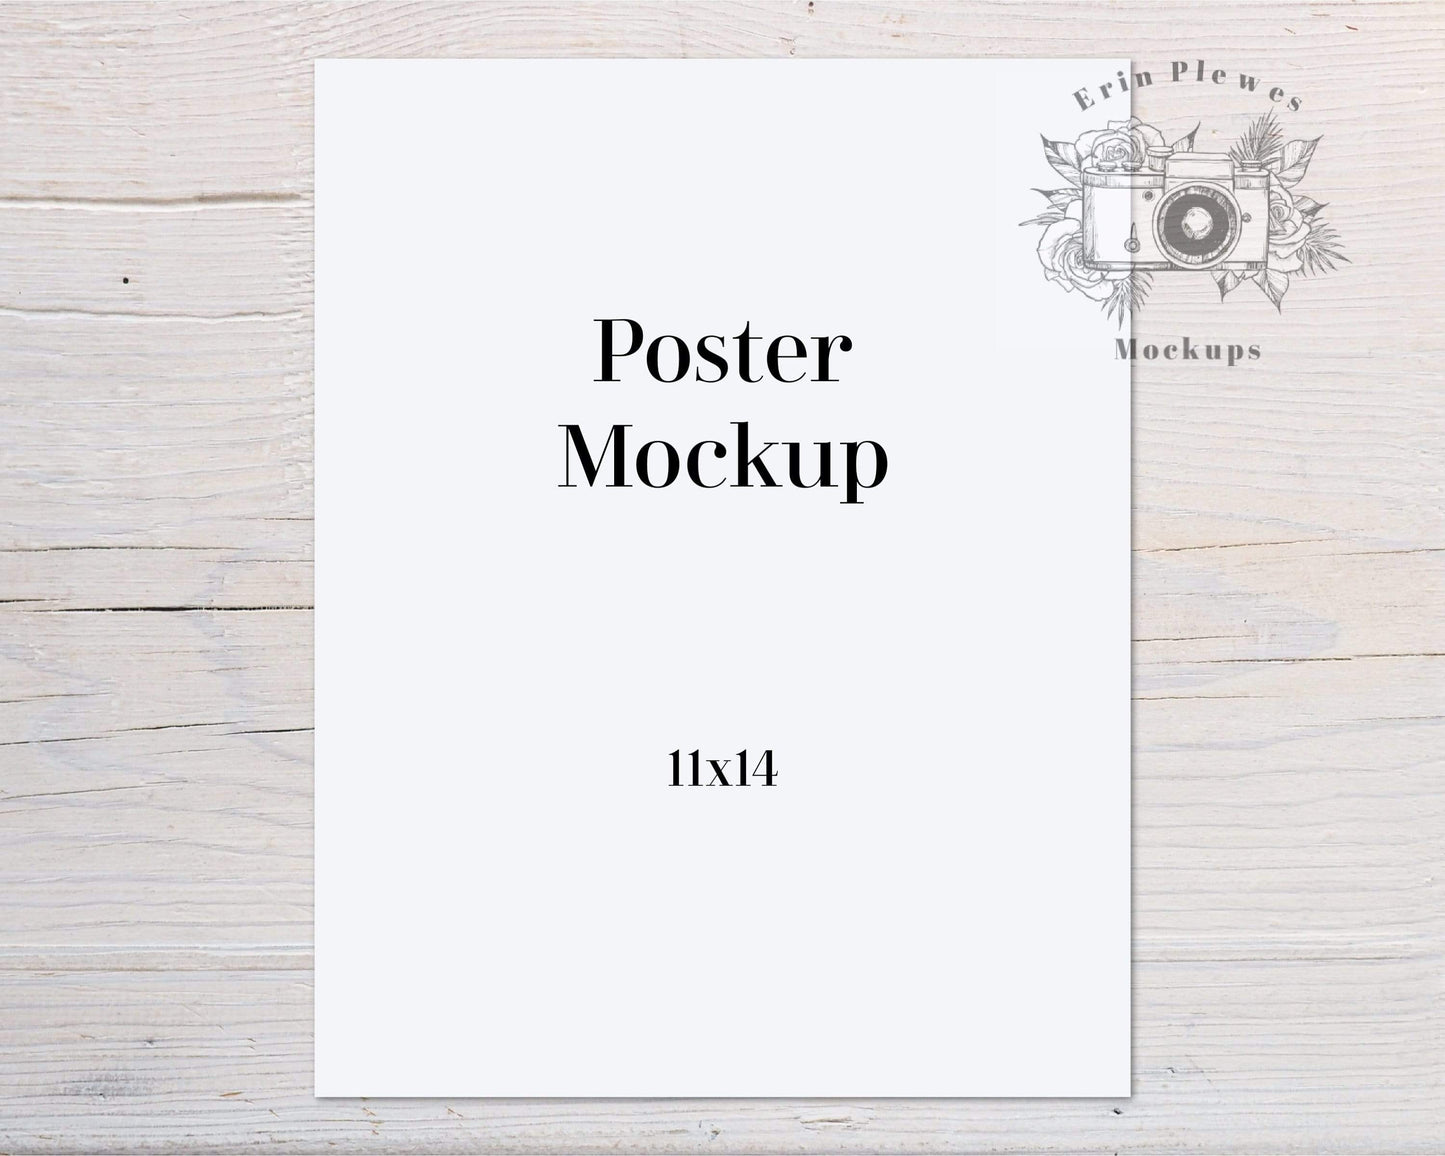 Erin Plewes Mockups Poster Mockup, Print Mock Up 11x14 on White Farmhouse Style Rustic Wood, Stationery Flatlay, Jpeg Instant Digital Download